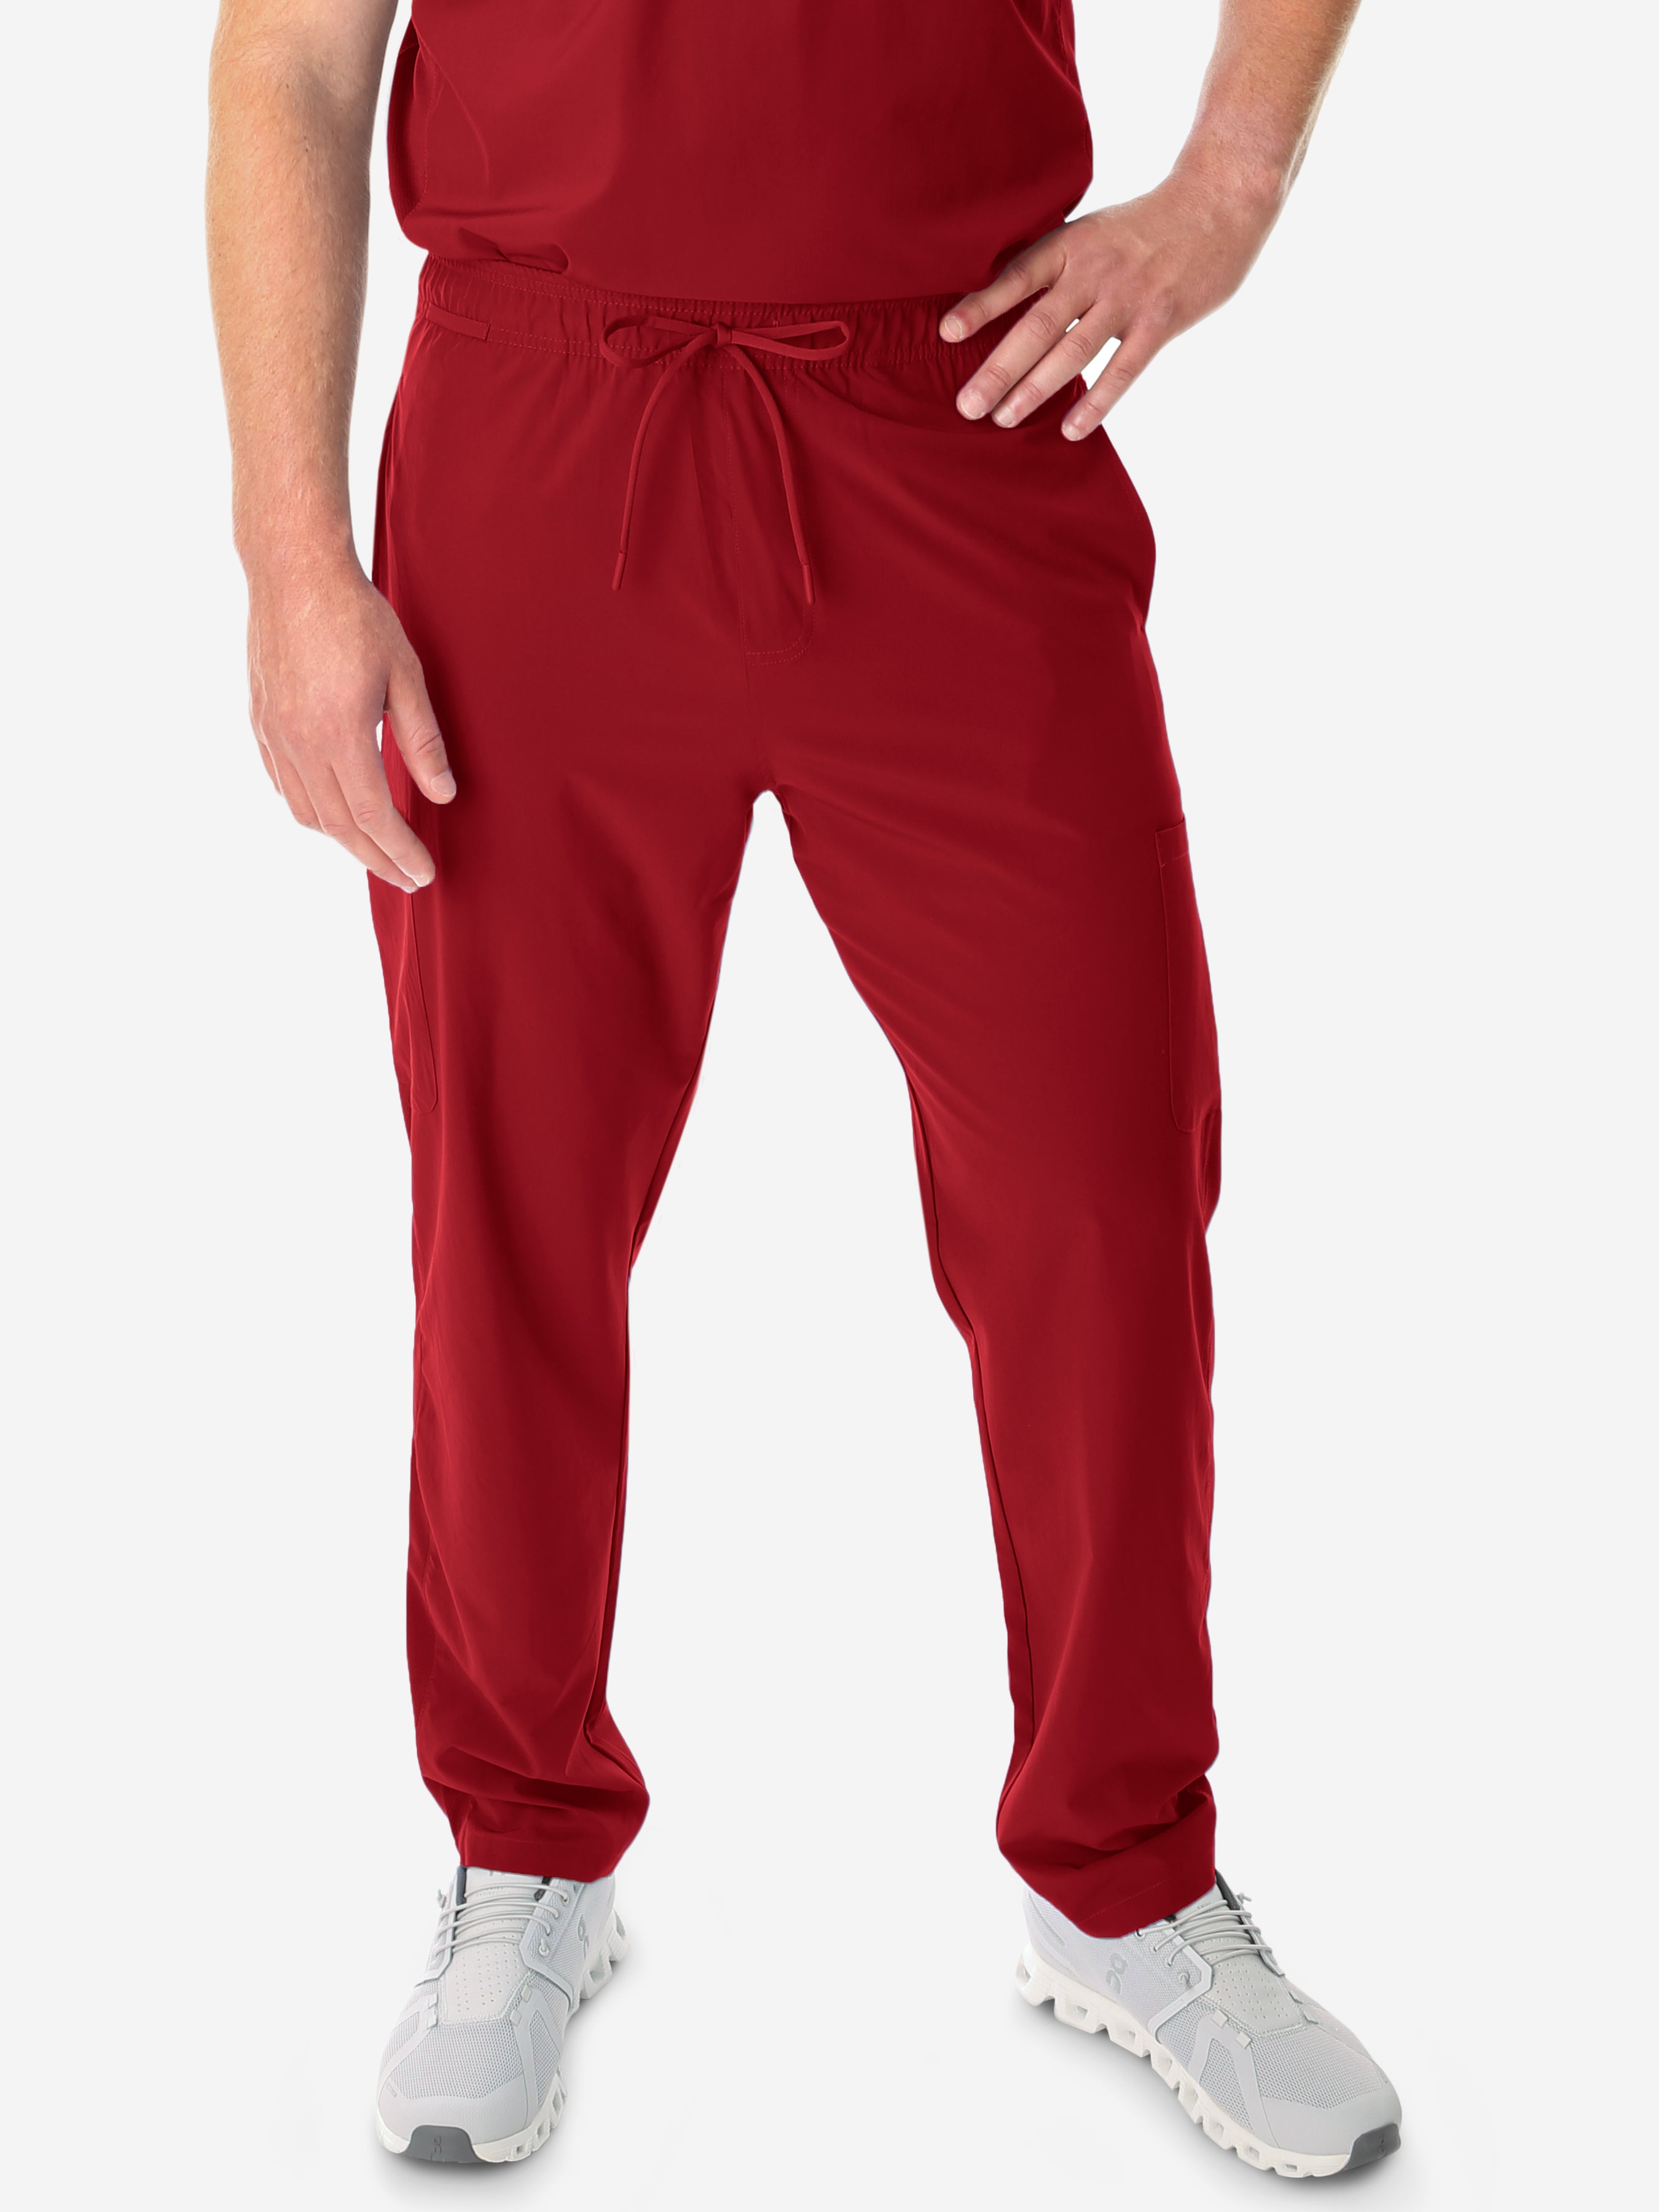 TiScrubs Bold Burgundy Men's 9-Pocket Scrub Pants Front Pants Only